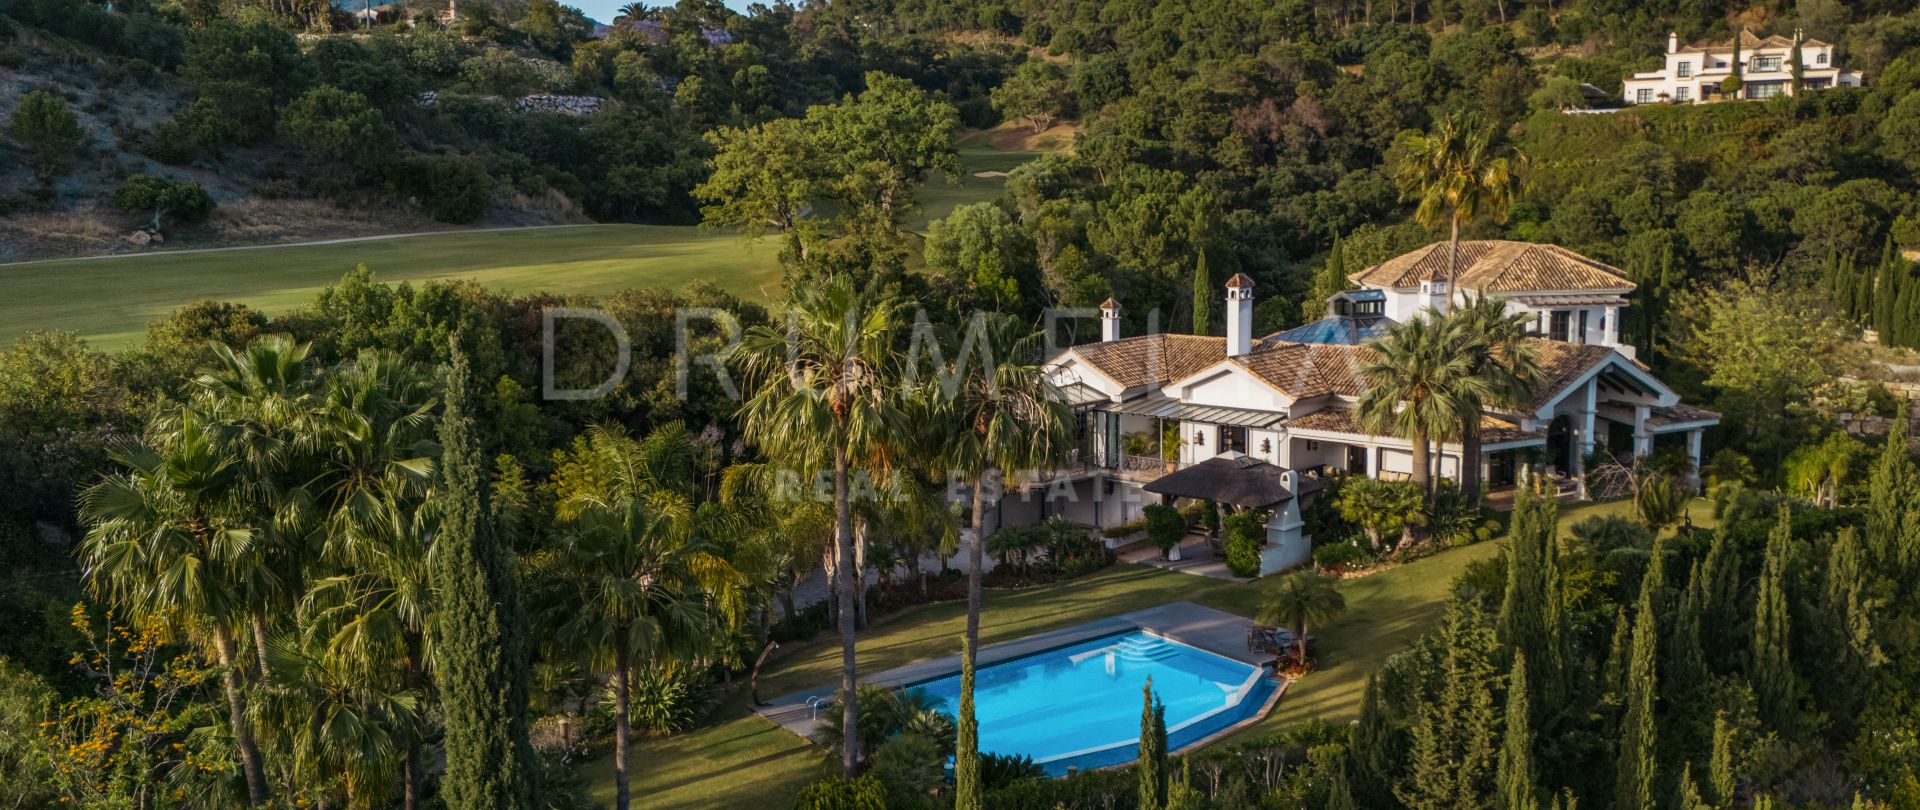 CASA OLIVO - Spectacular Andalusian villa with delightful views in high La Zagaleta, Benahavis